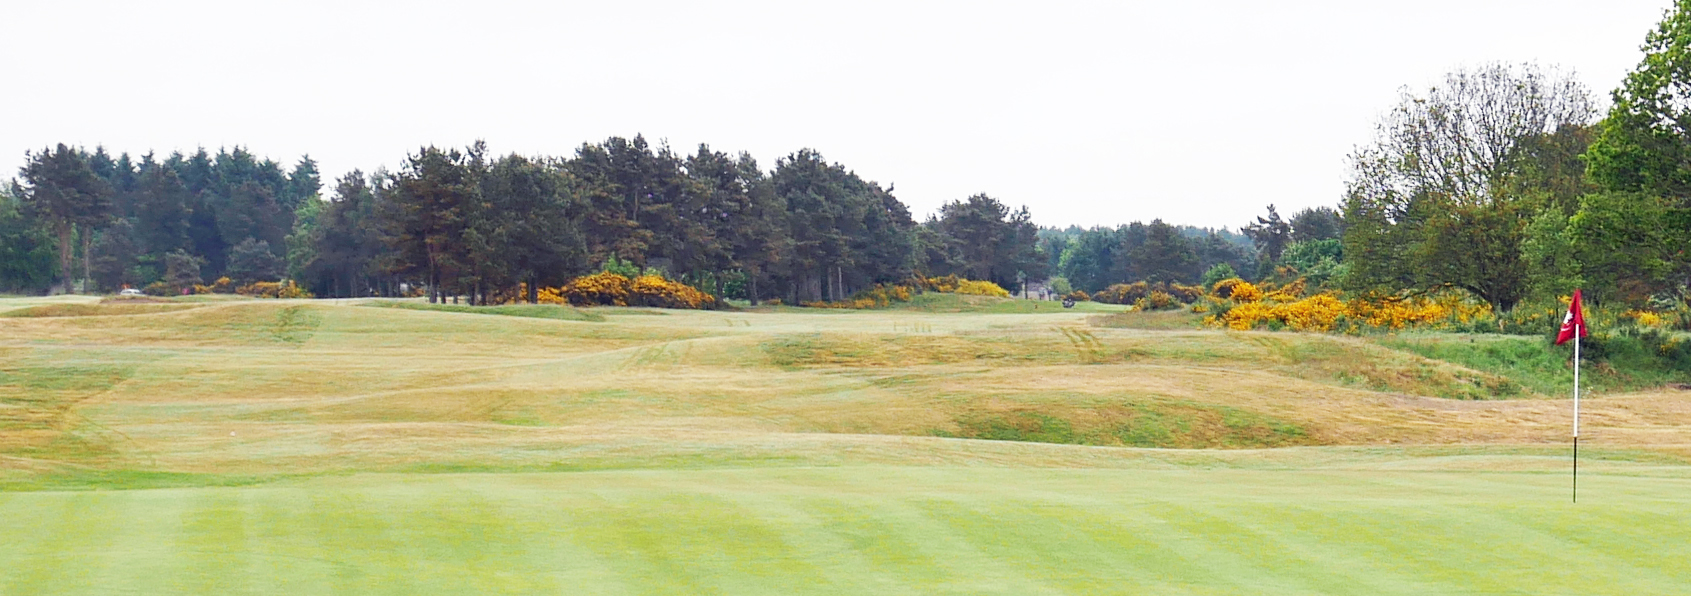 Scotscraig Golf Club - the home of golf